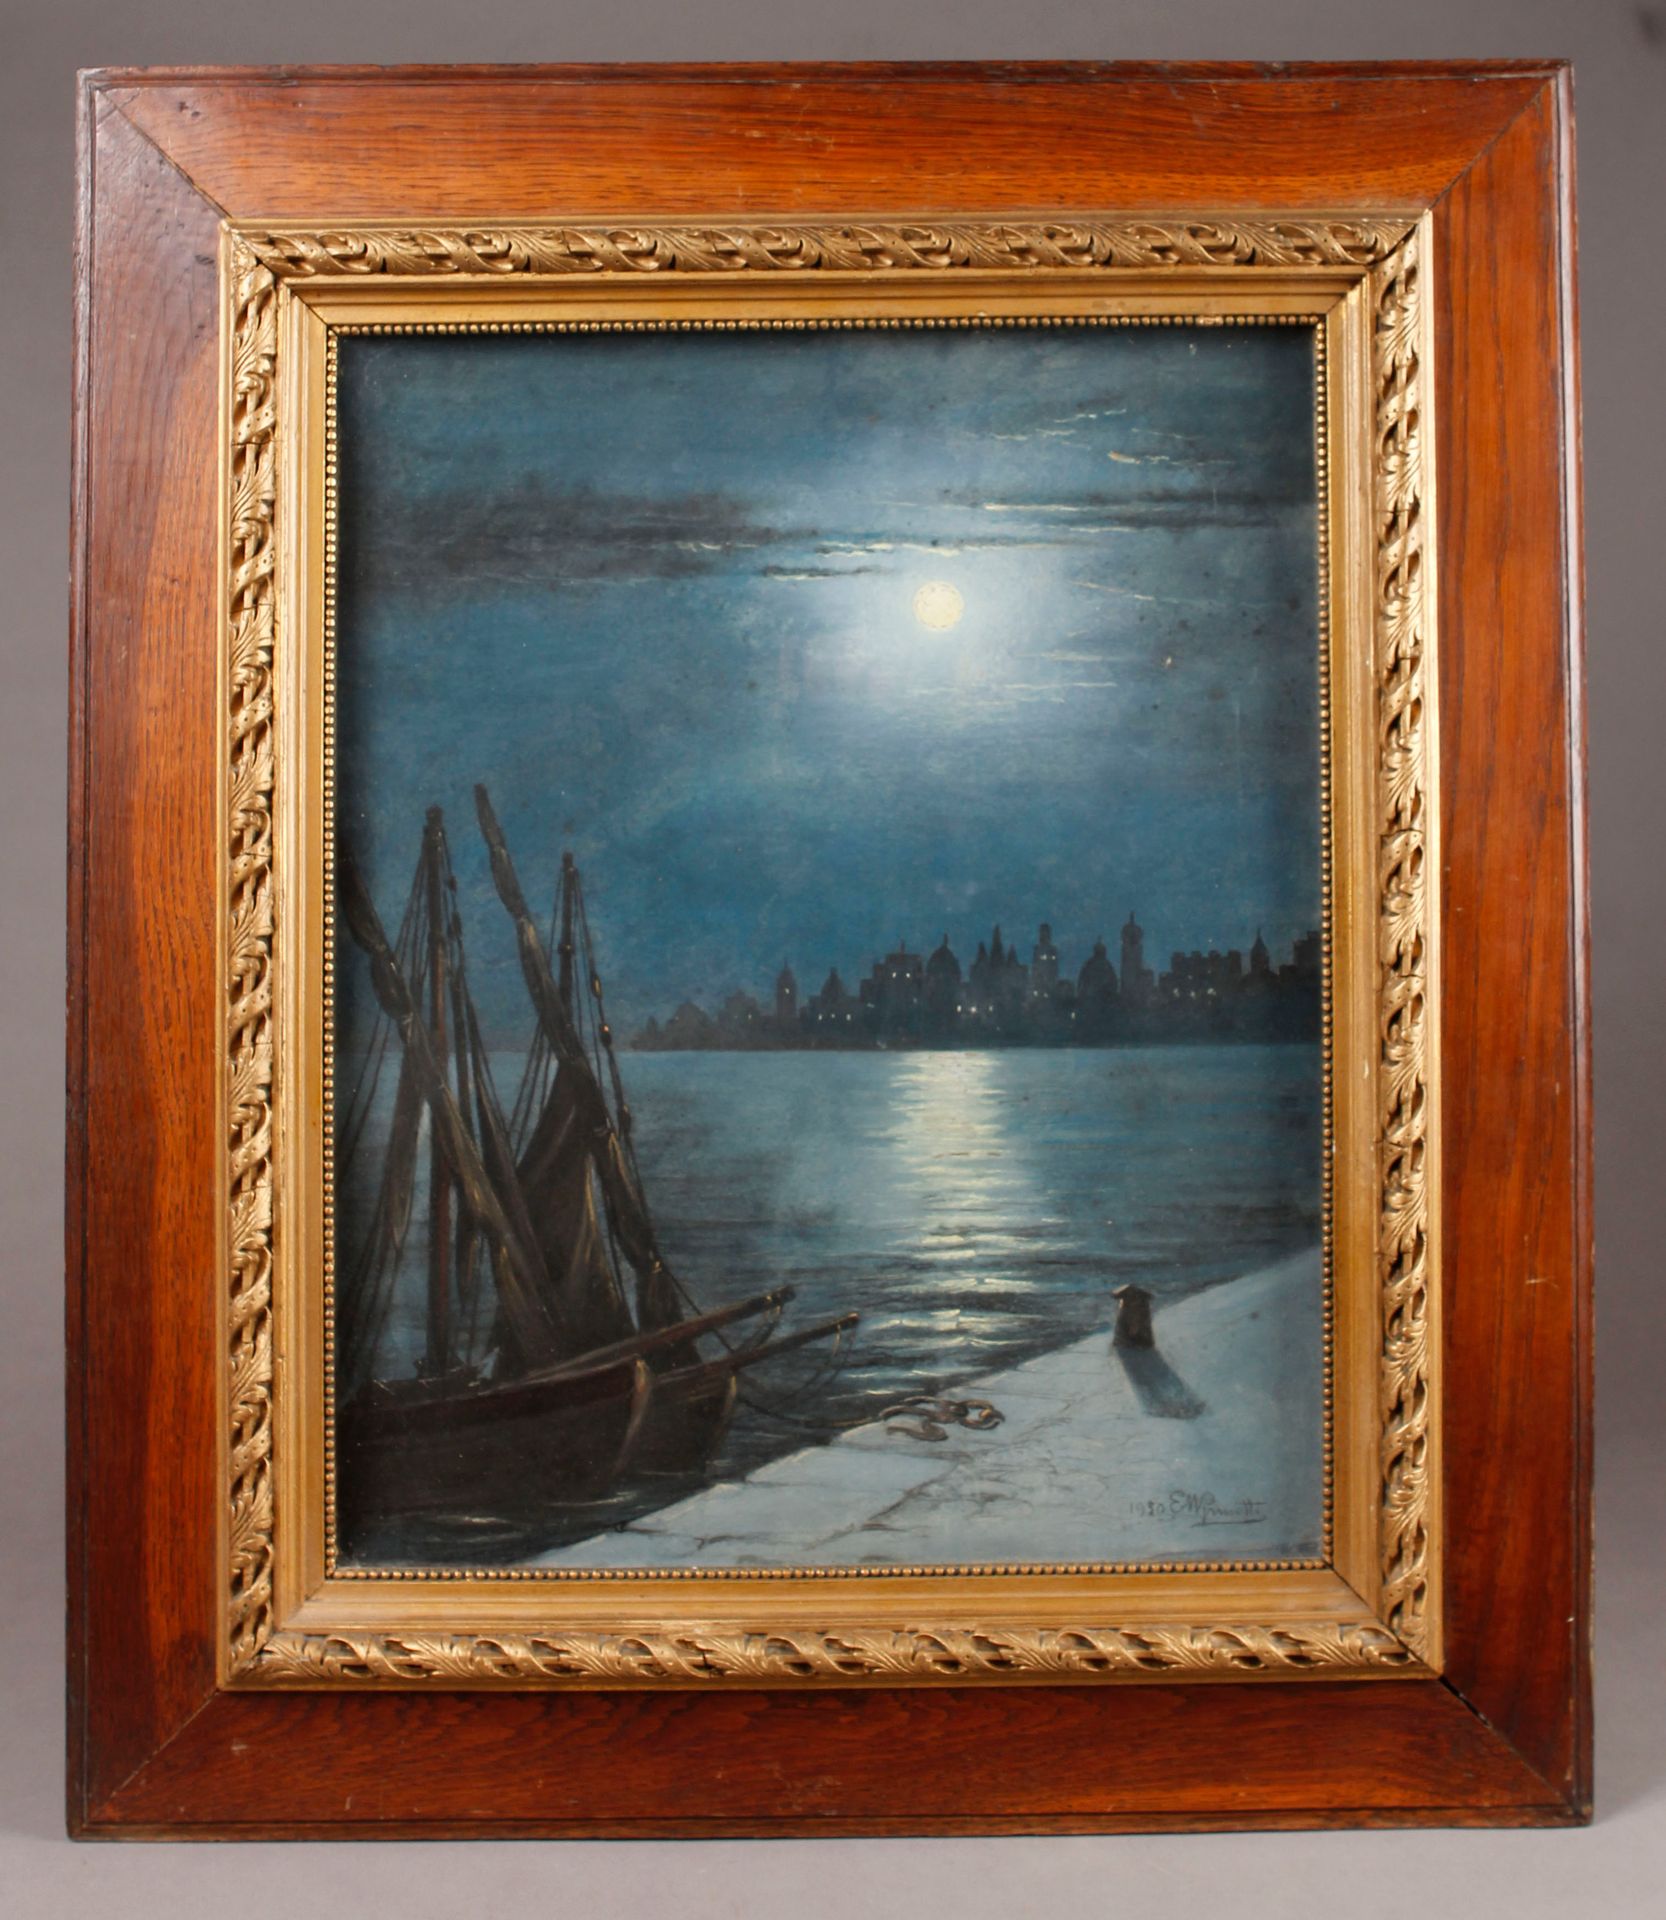 Null 学校 20世纪初。
月光
粉彩画，右下角署名E.W. Prinetti (?)，日期为1930年。
51 x 41厘米
(在玻璃下装框)。